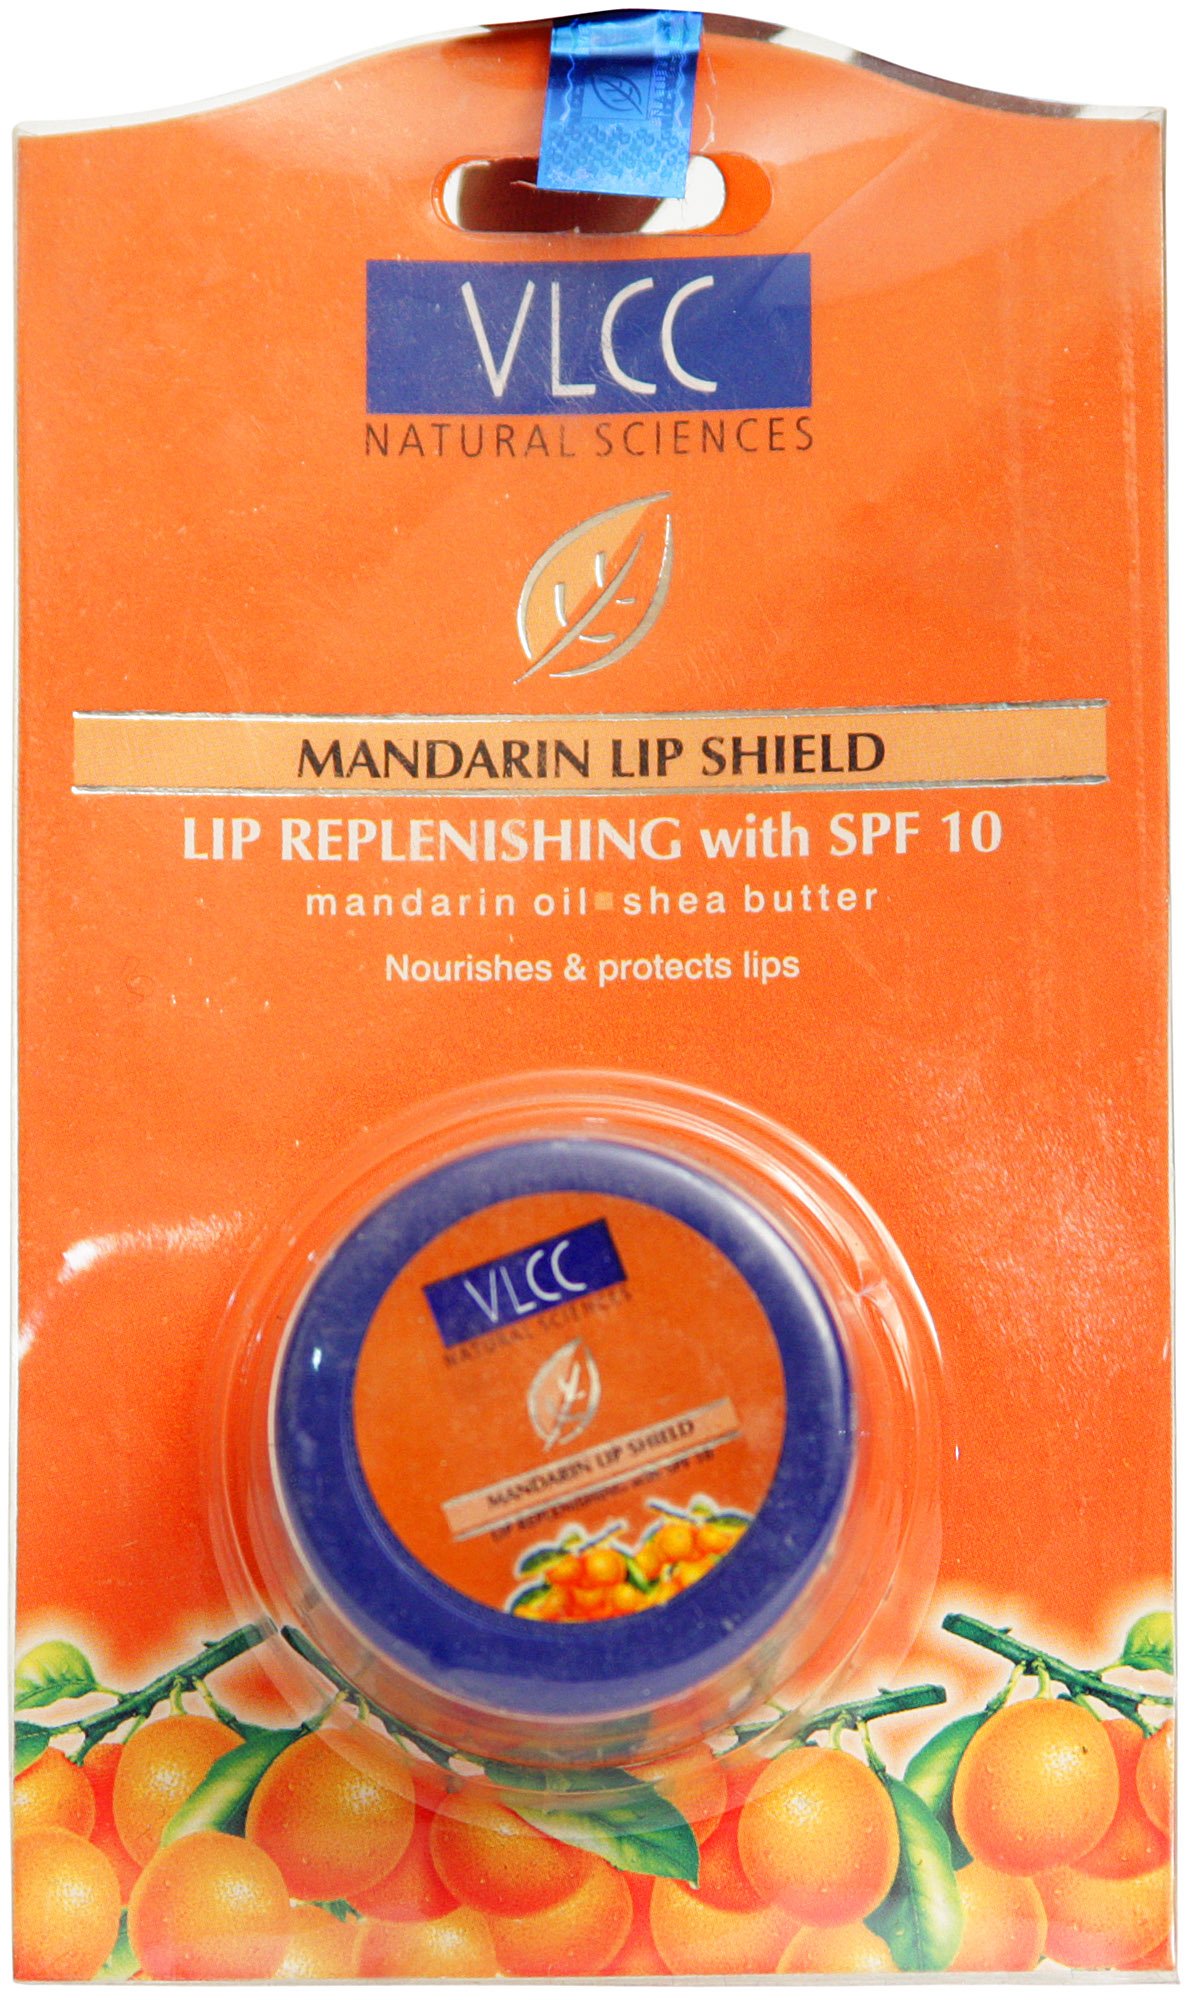 Mandarin Lip Shield: Lip Replenishing With SPF 10 - book cover